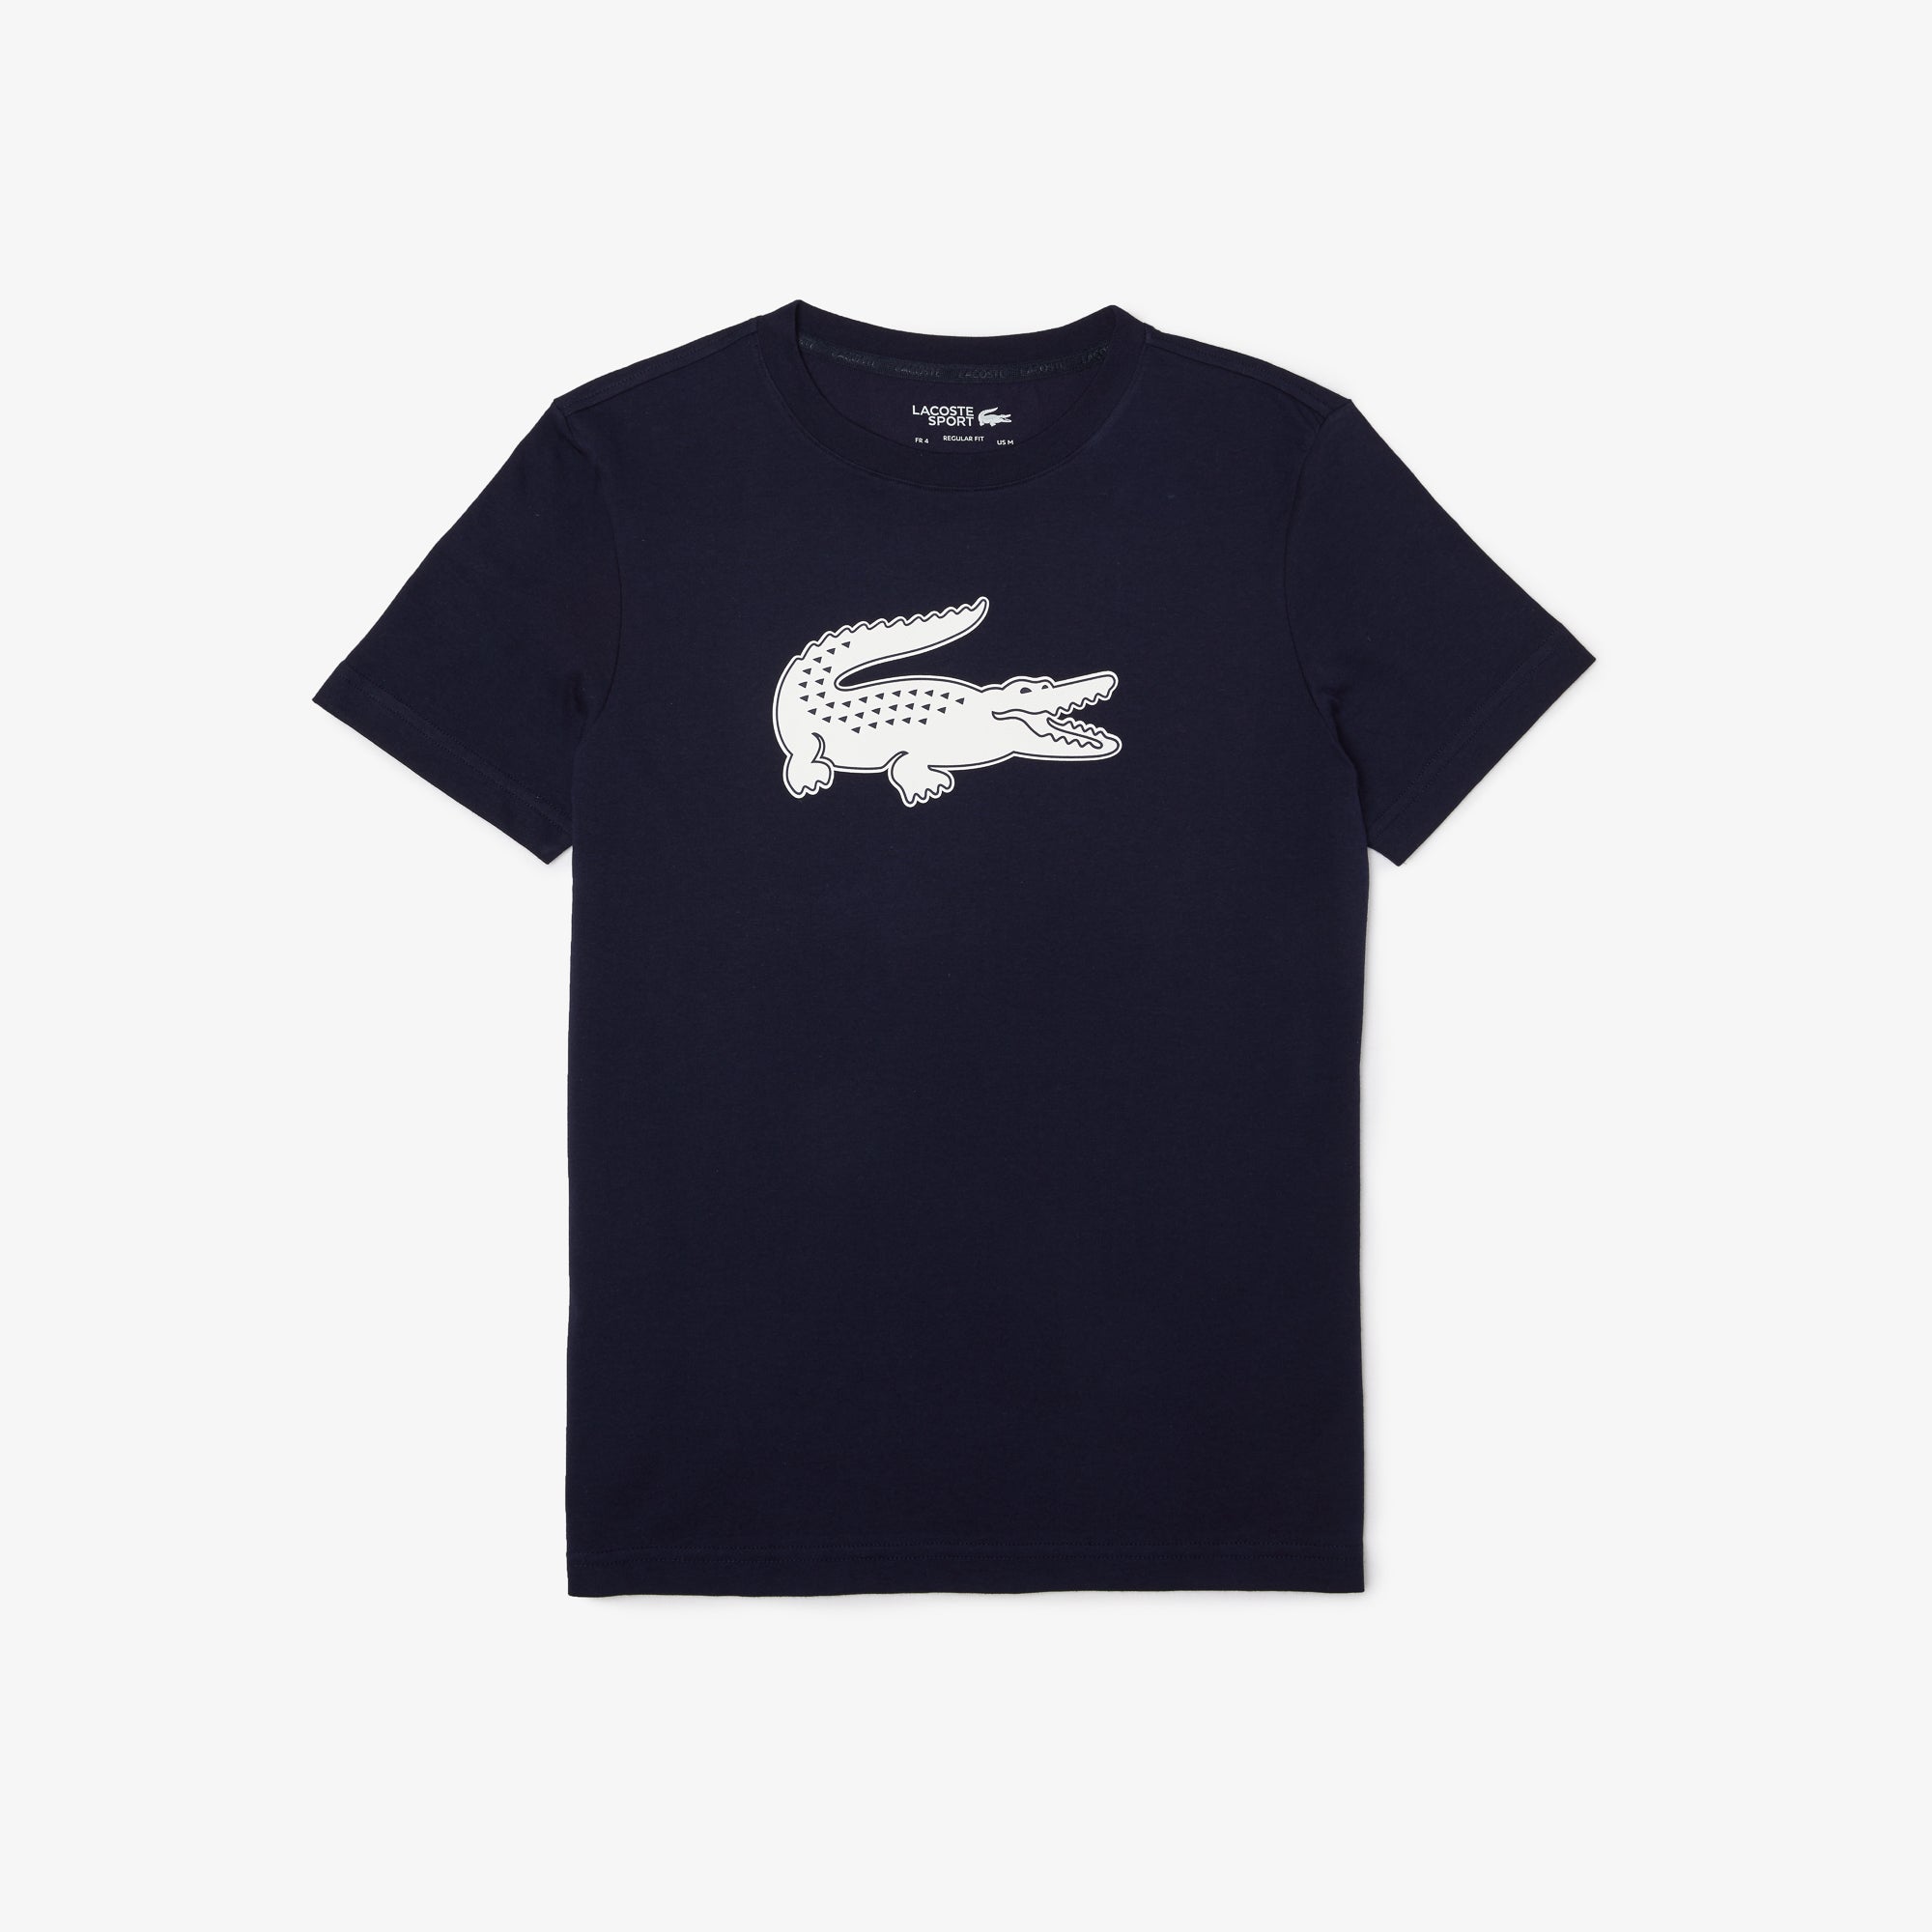 Lacoste T-shirt (Navy Blue/White)